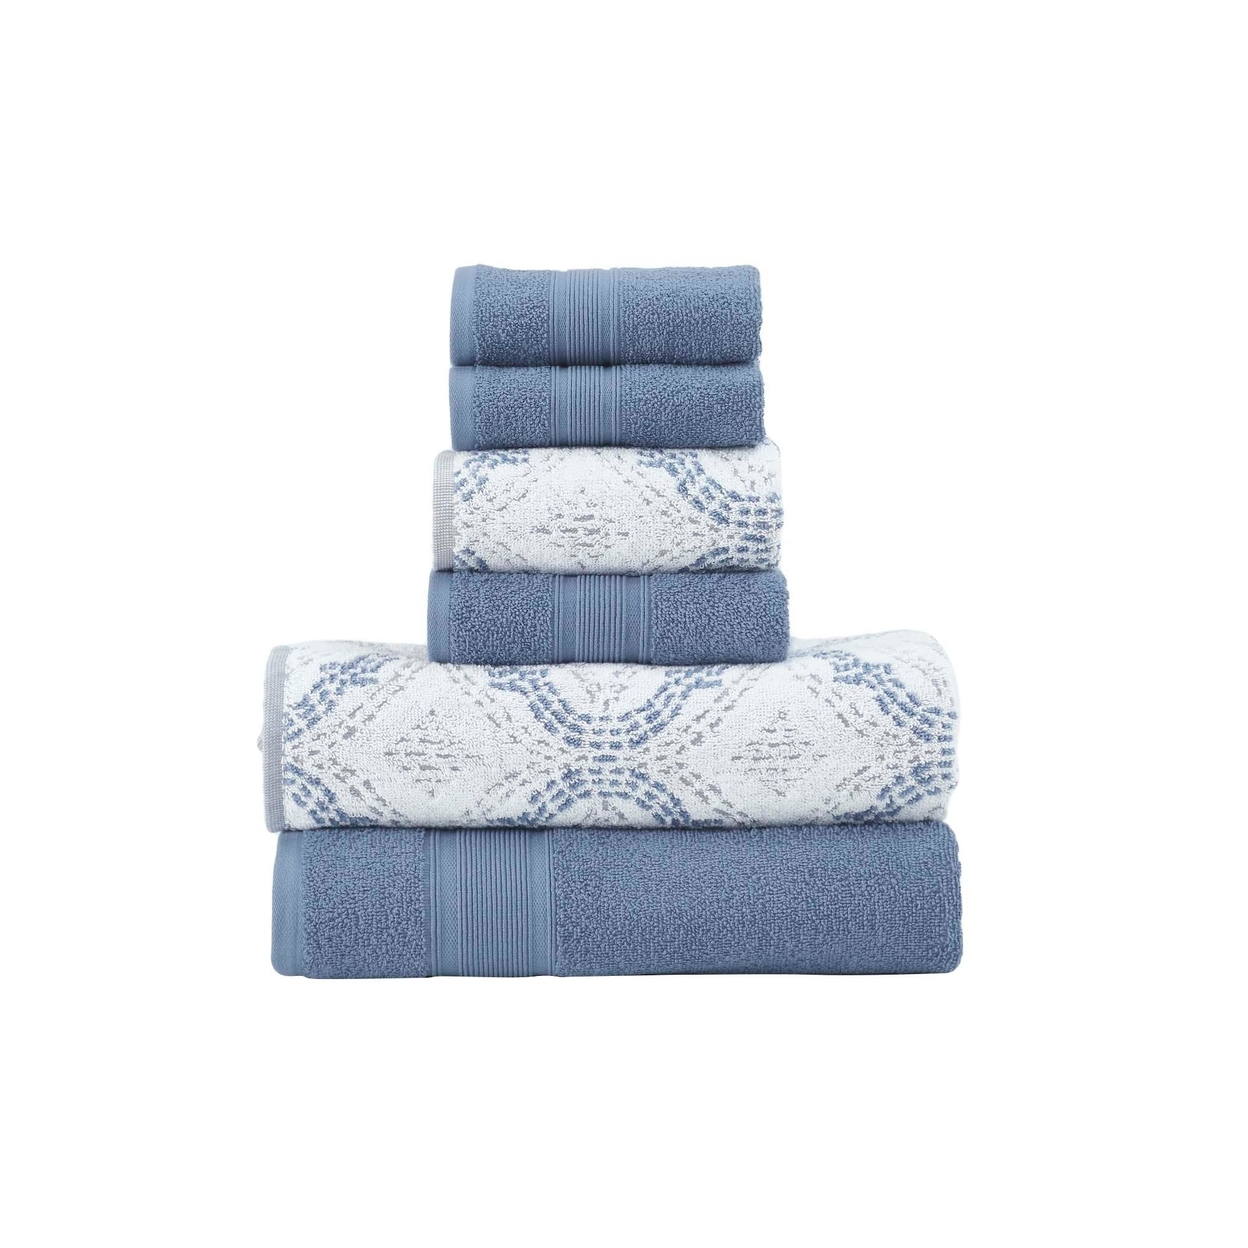 Oya 6pc Cotton Towel Set, Quatrefoil, White, Blue By The Urban Port- Saltoro Sherpi